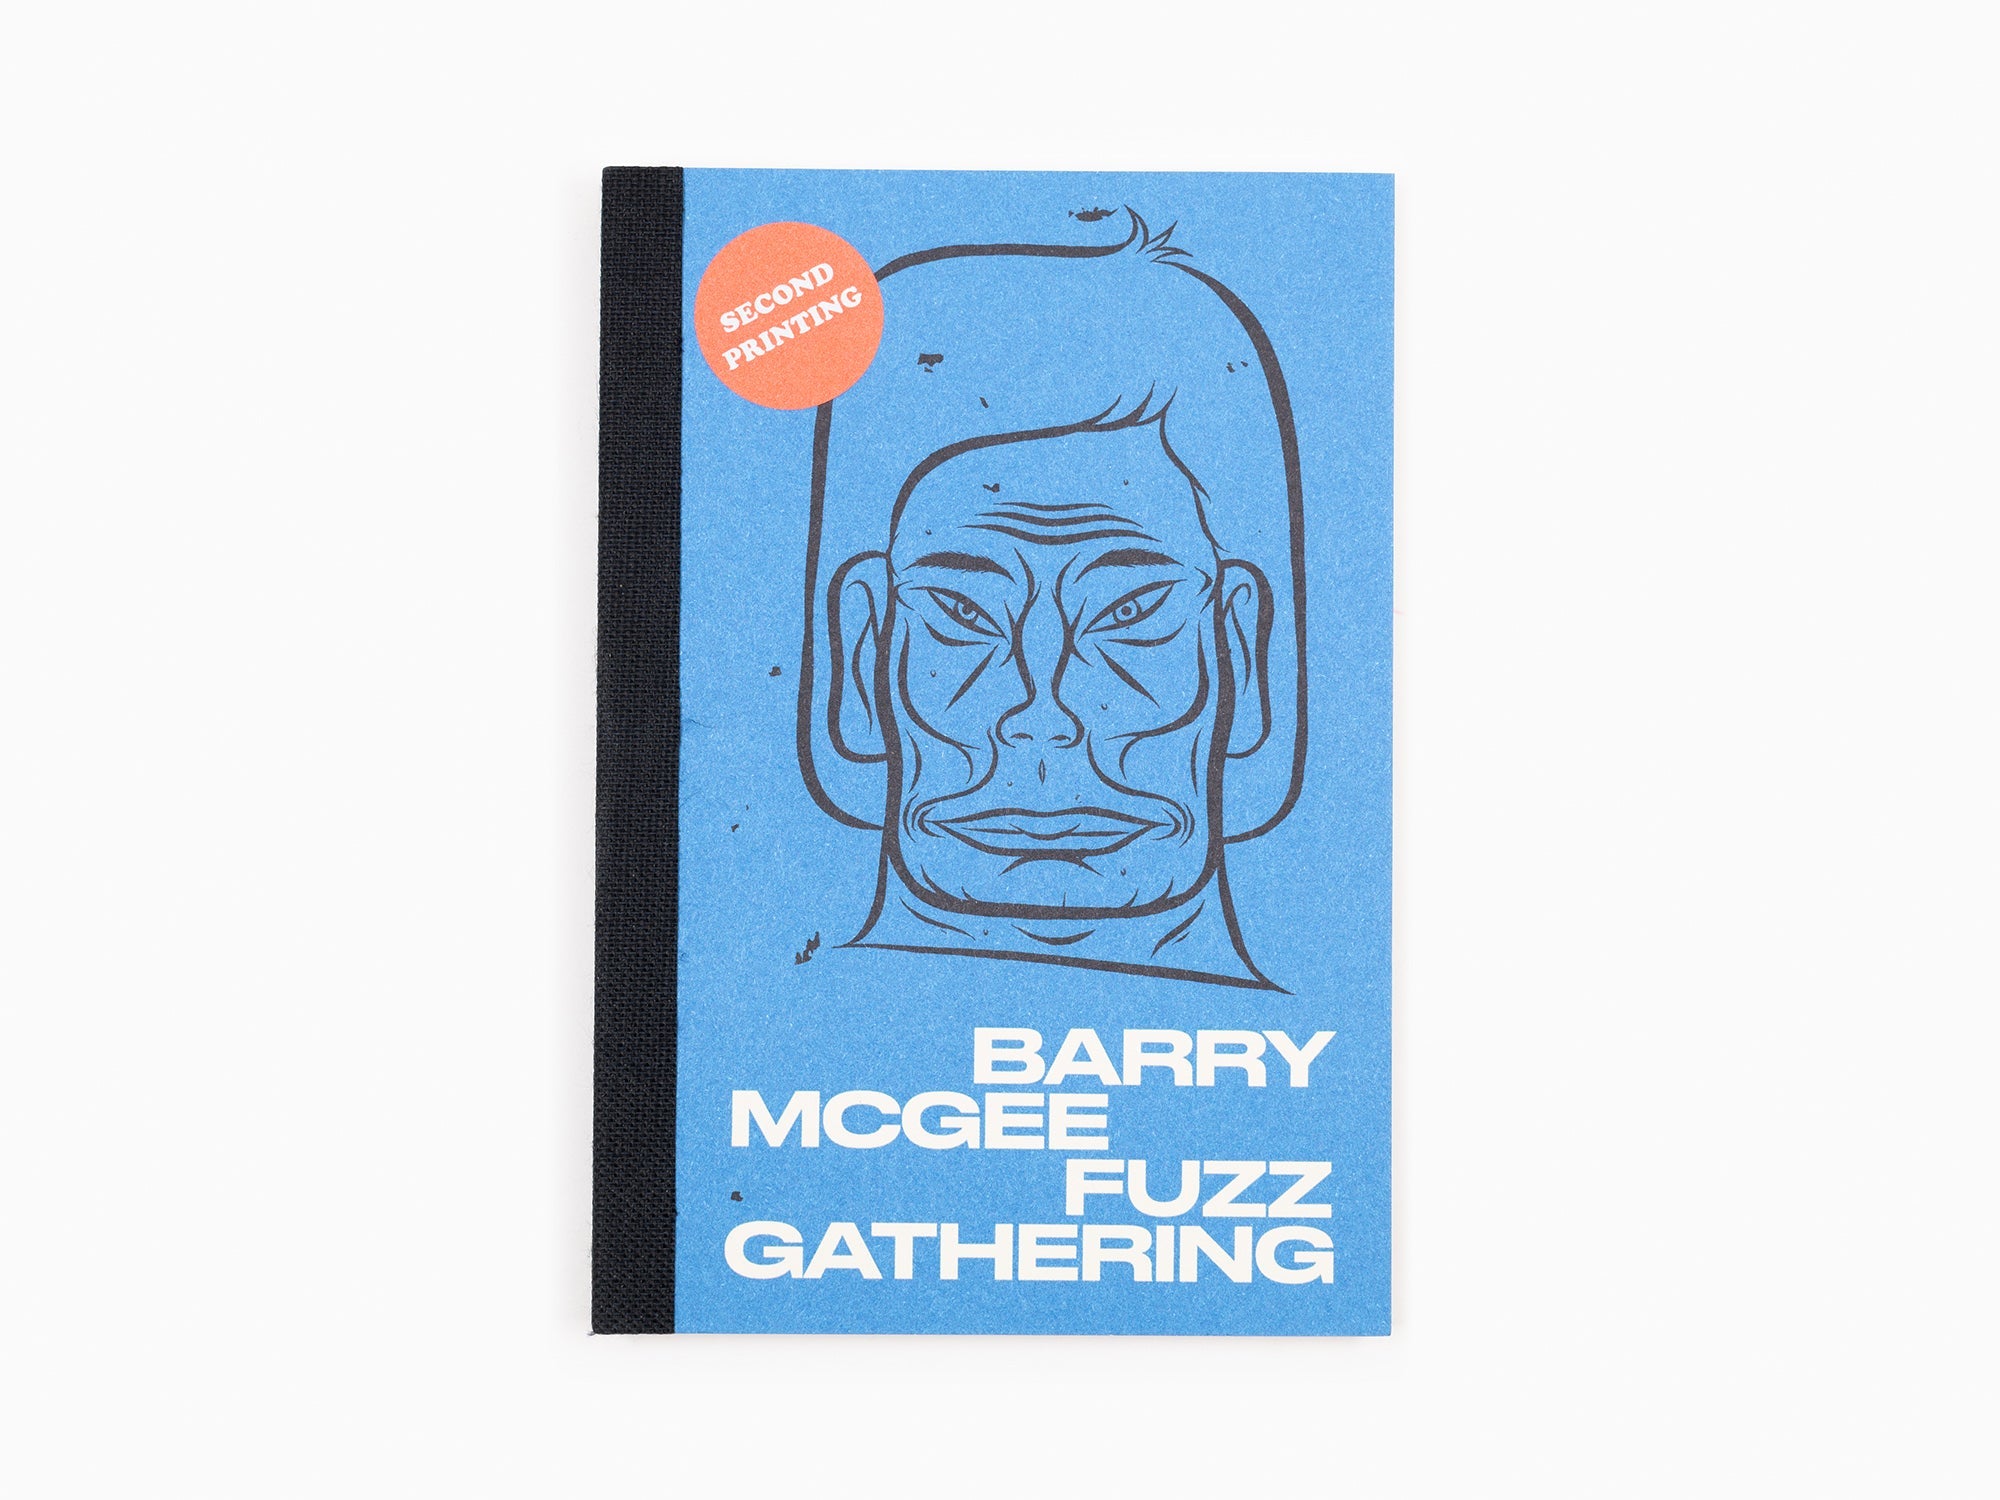 Barry McGee - Fuzz Gathering (fanzine, 2nd print run)